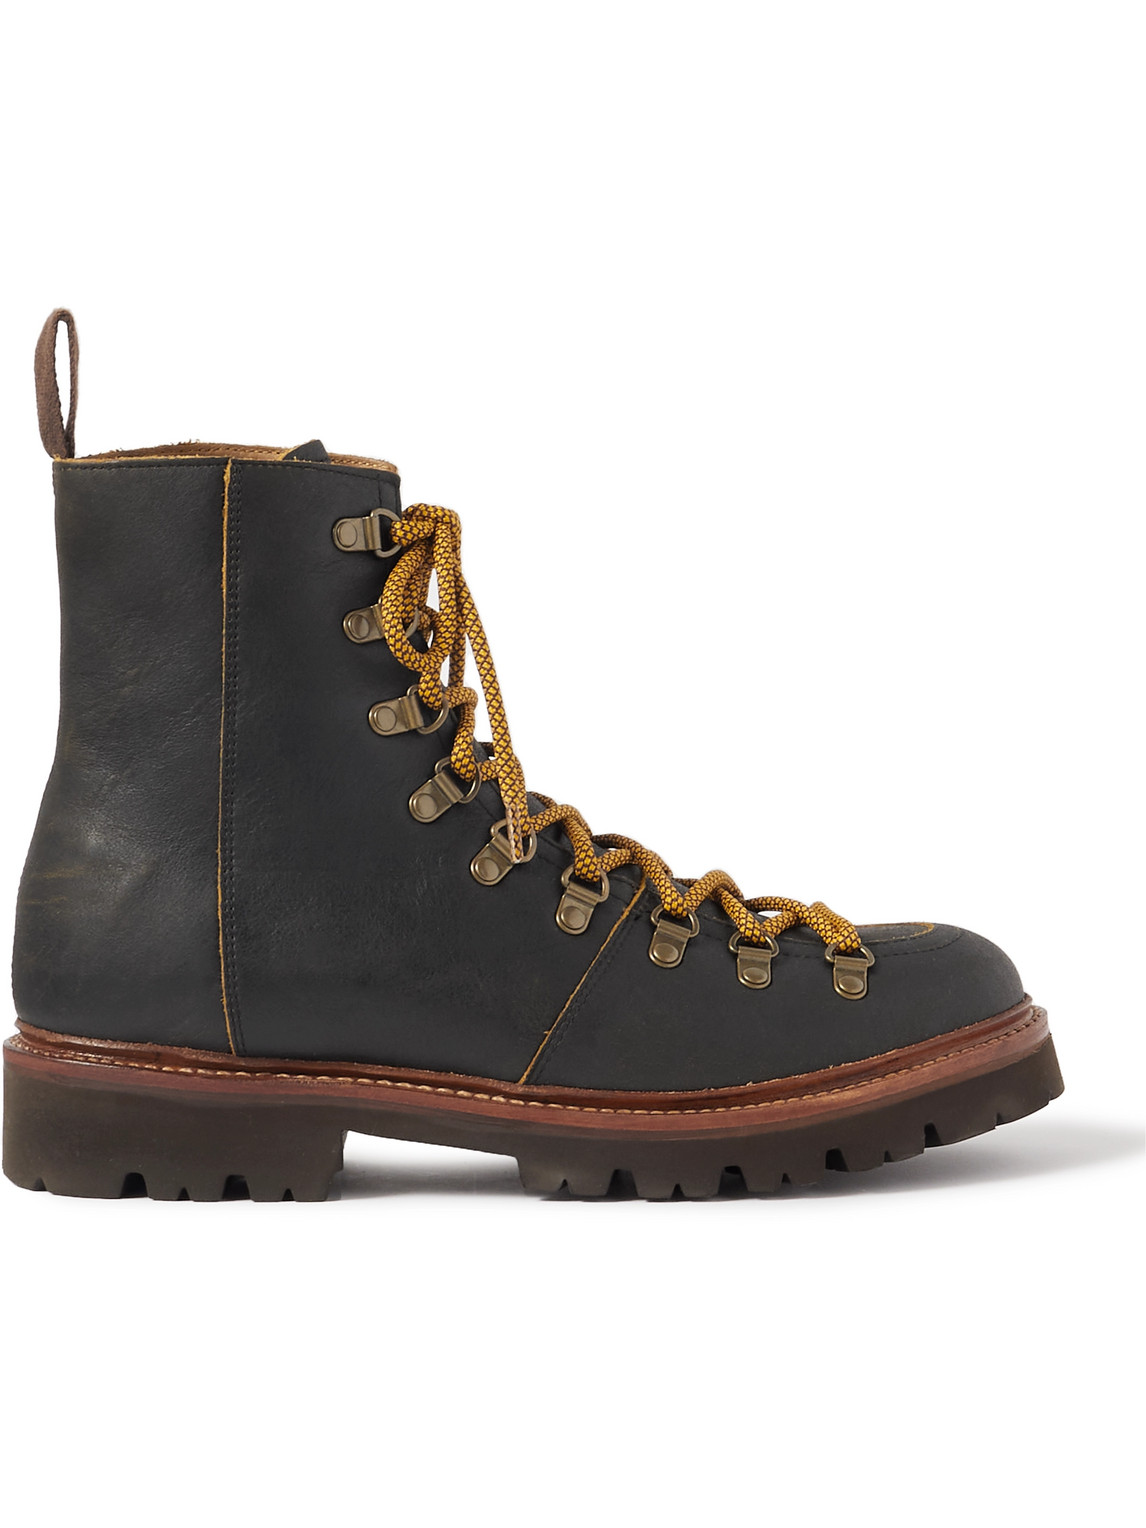 Brady Leather Boots